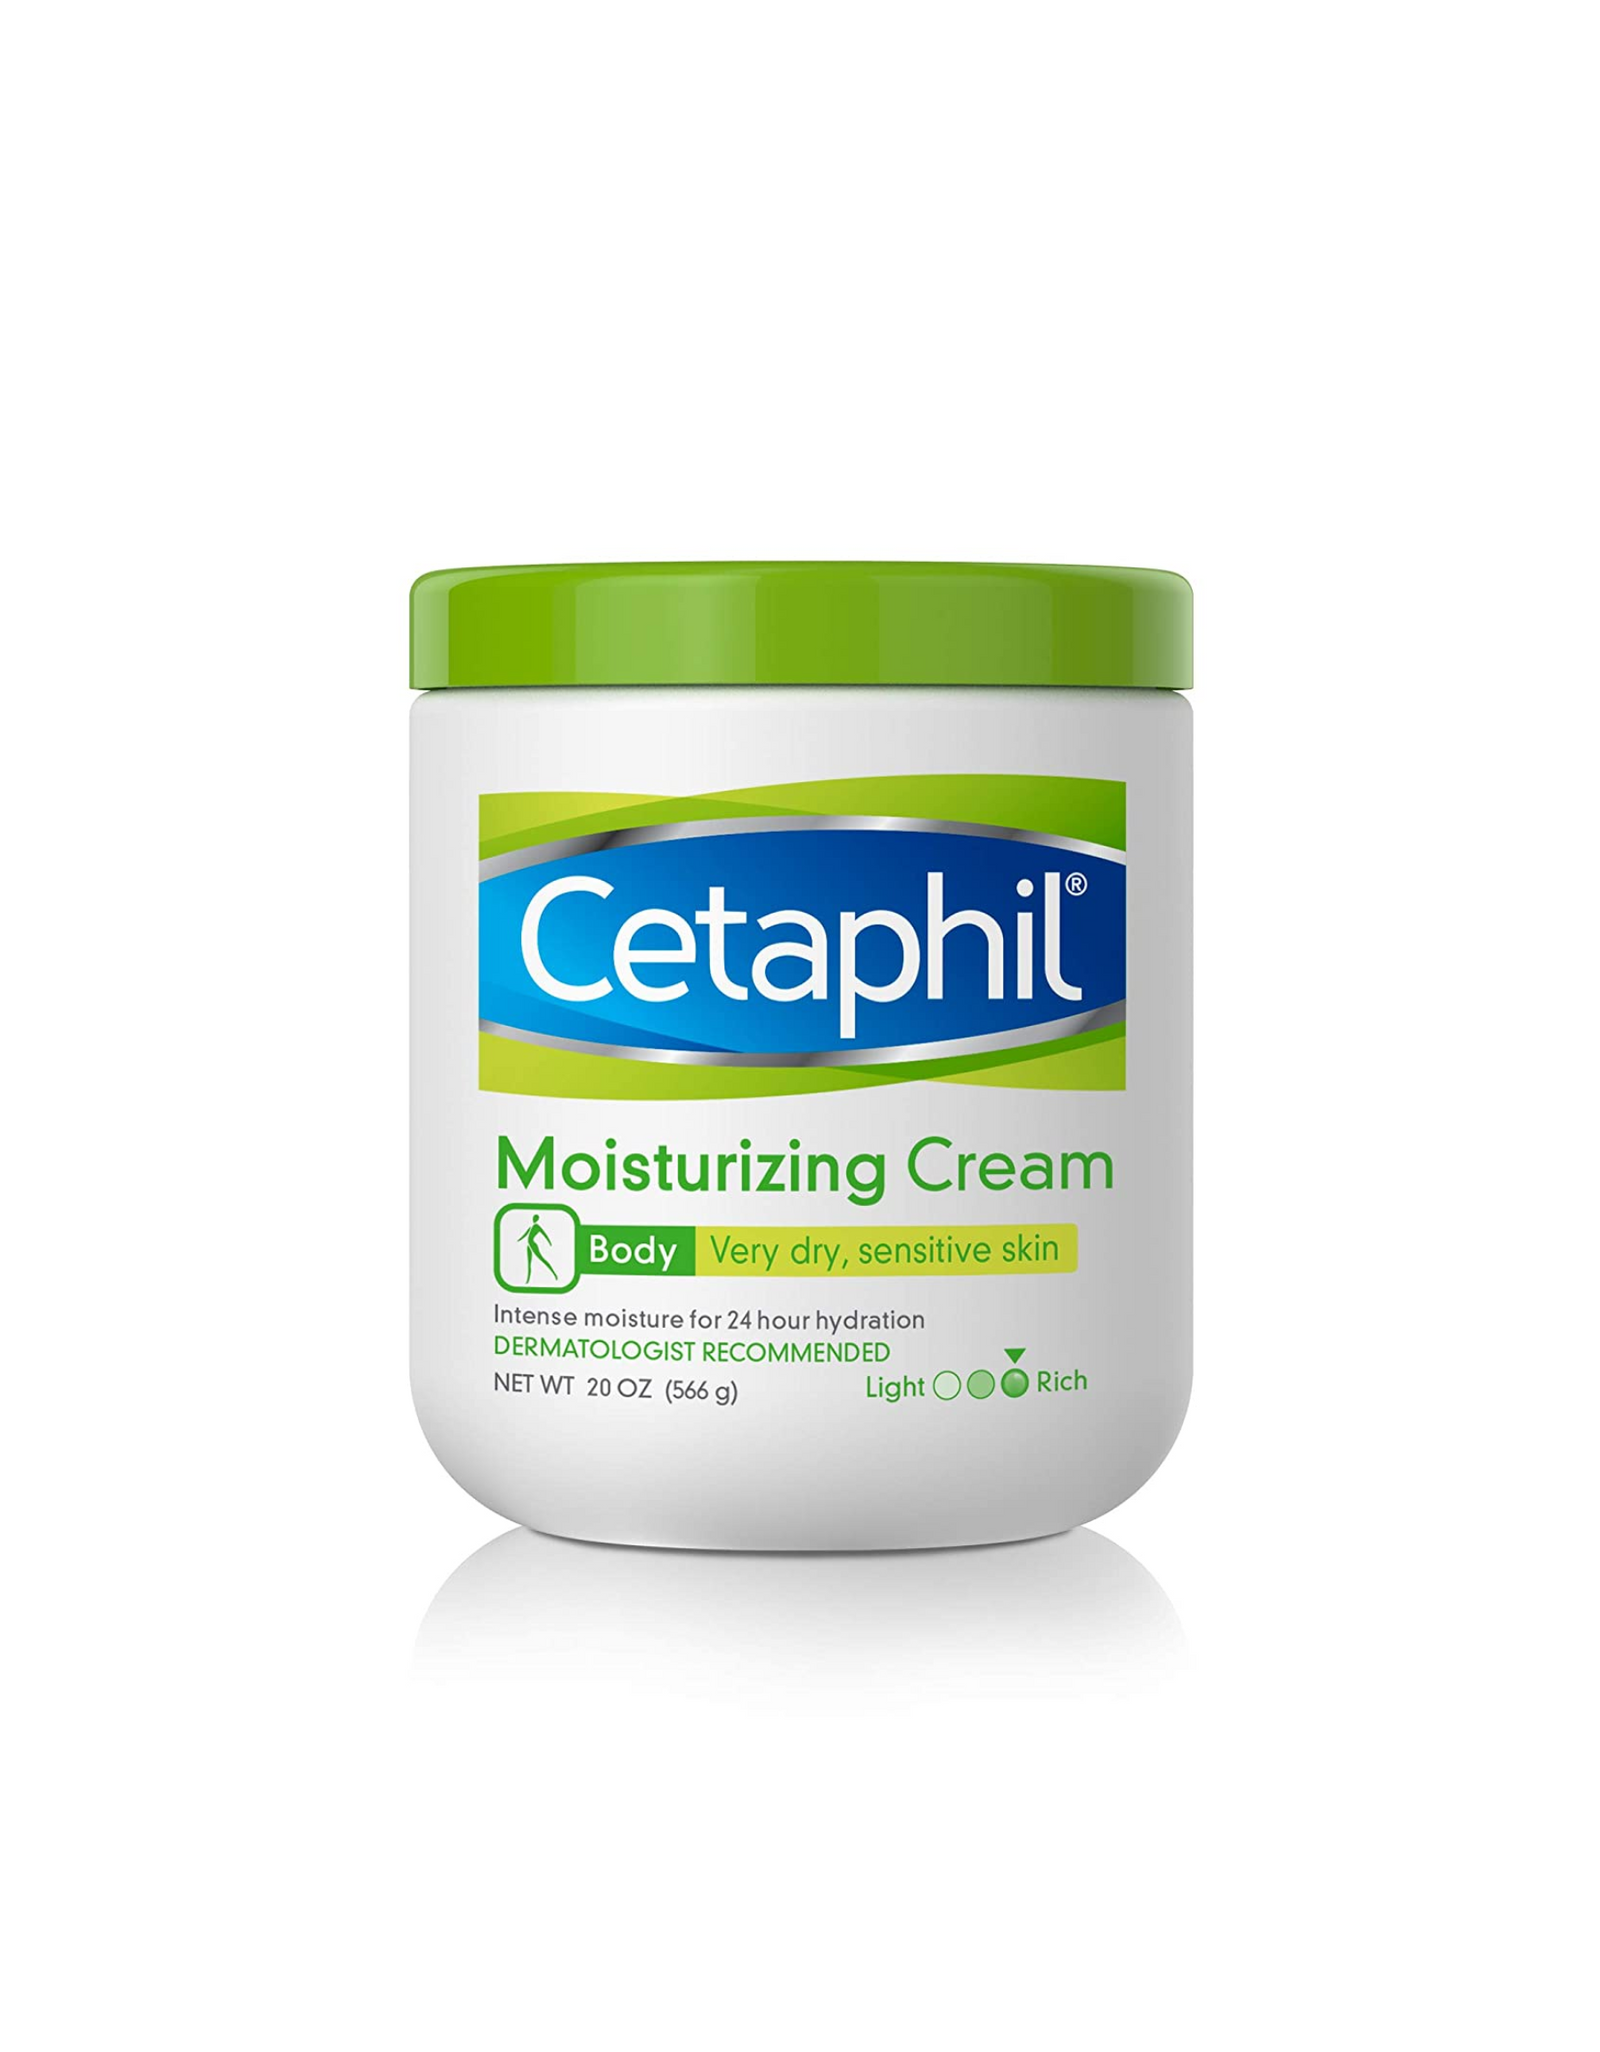 CETAPHIL Moisturizing Cream, for very dry, sensitive skin, 20 oz